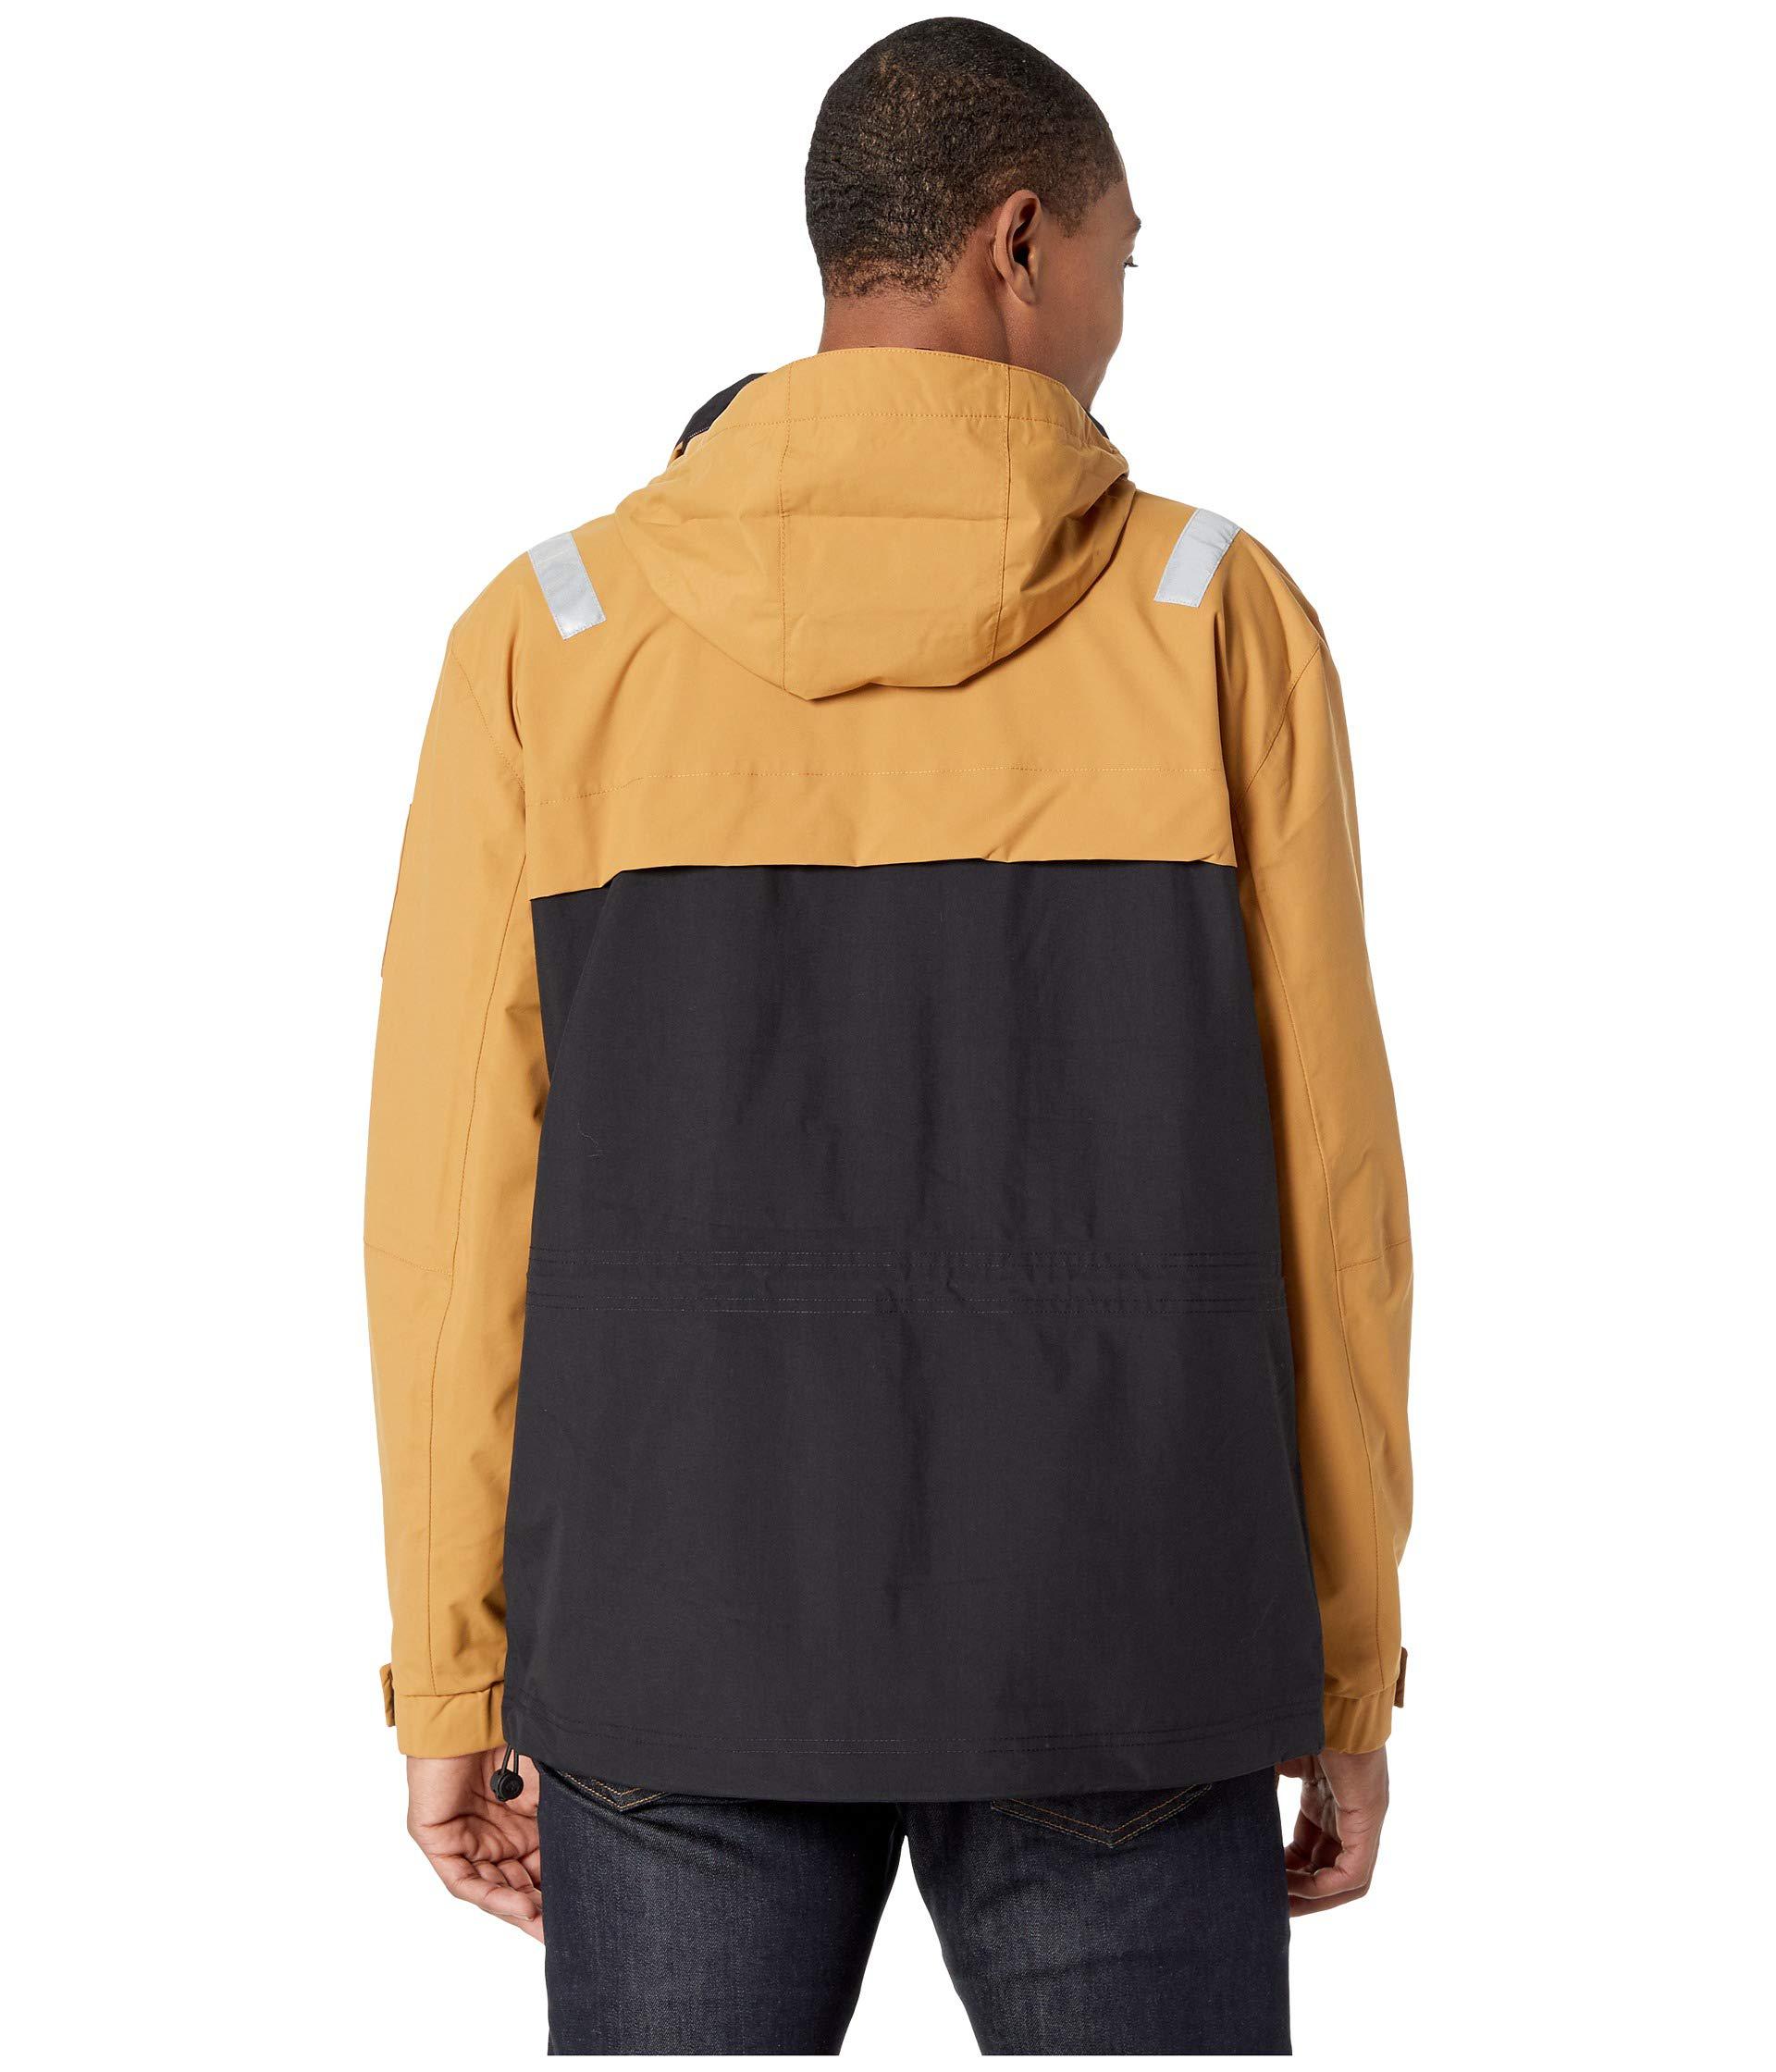 timberland color block jacket